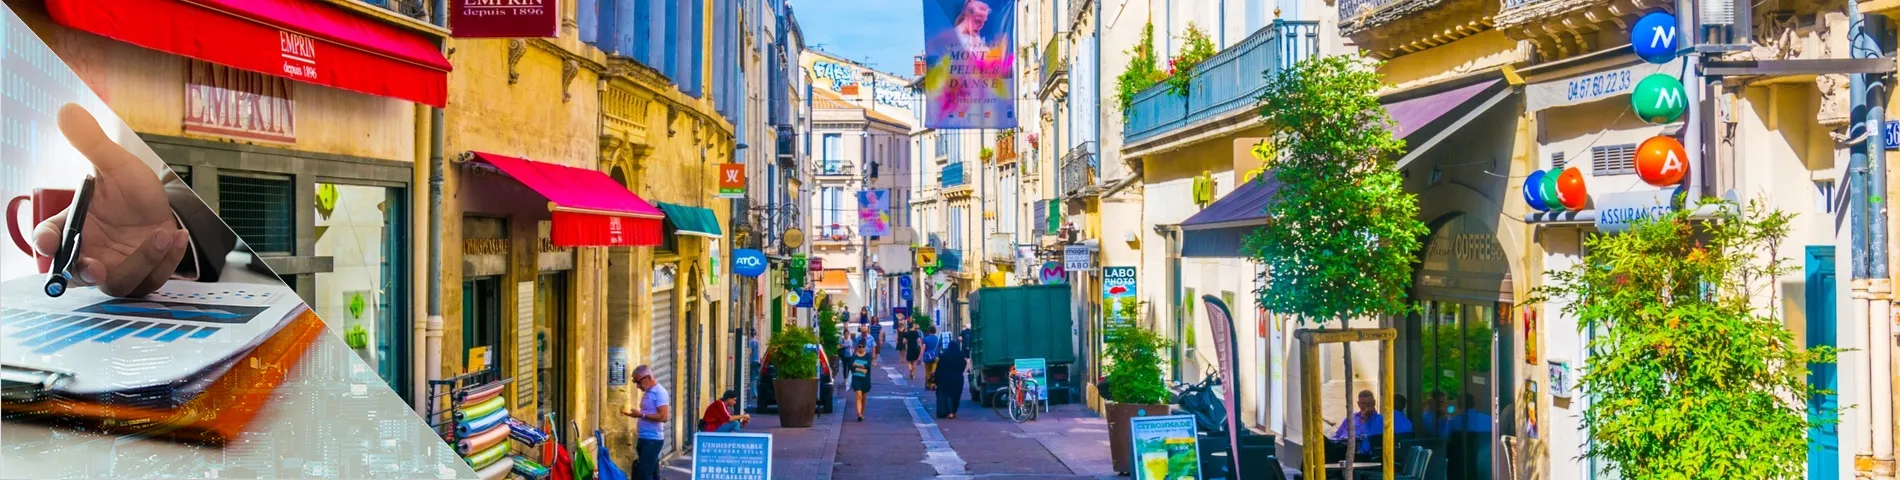 Montpellier - Bankacılık ve Finans